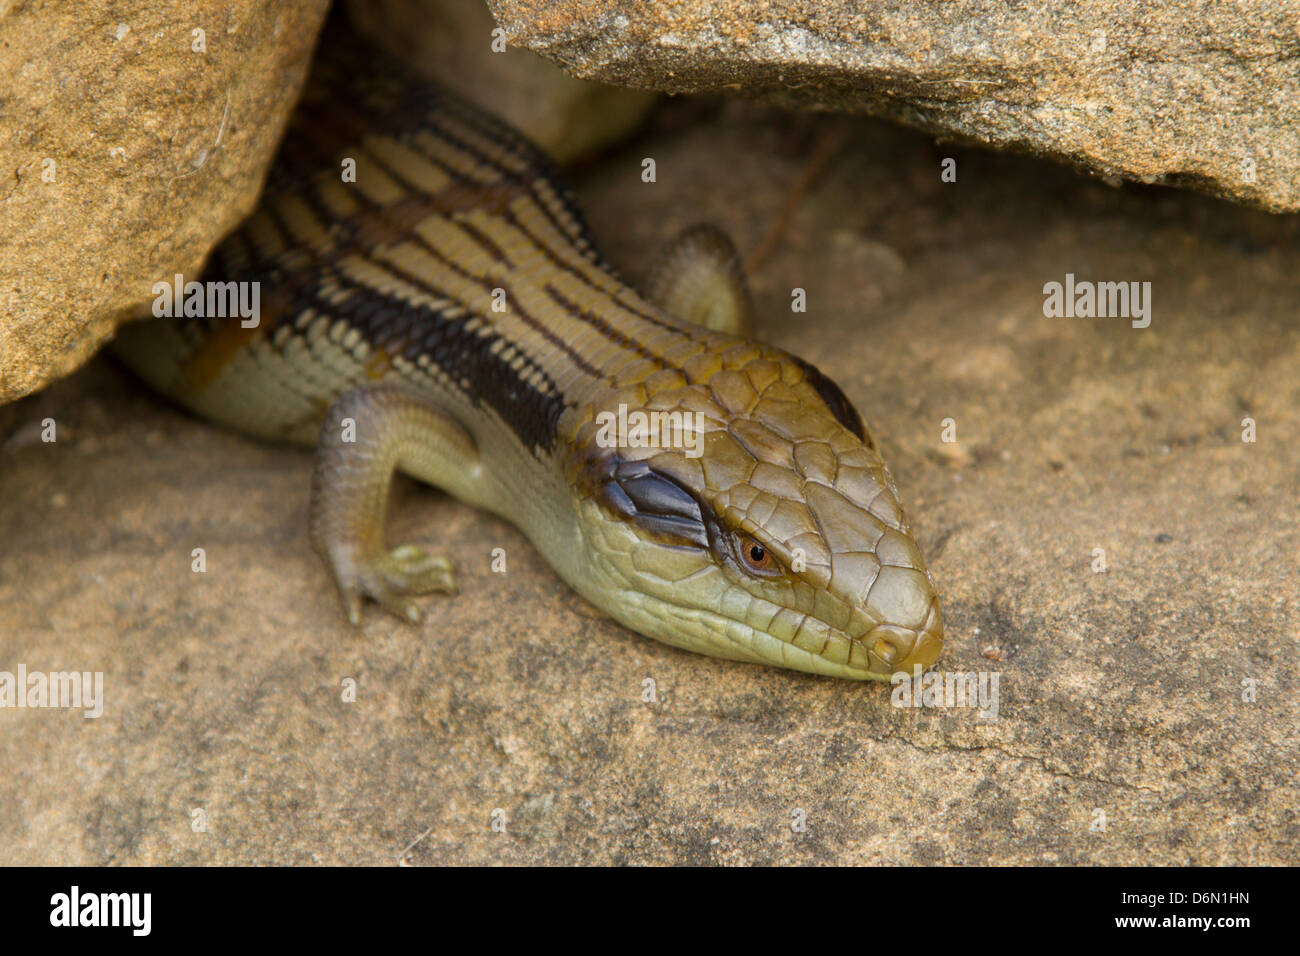 Australian reptile: Eastern blue-tongue lizard (Tiliqua scincoides). Stock Photo